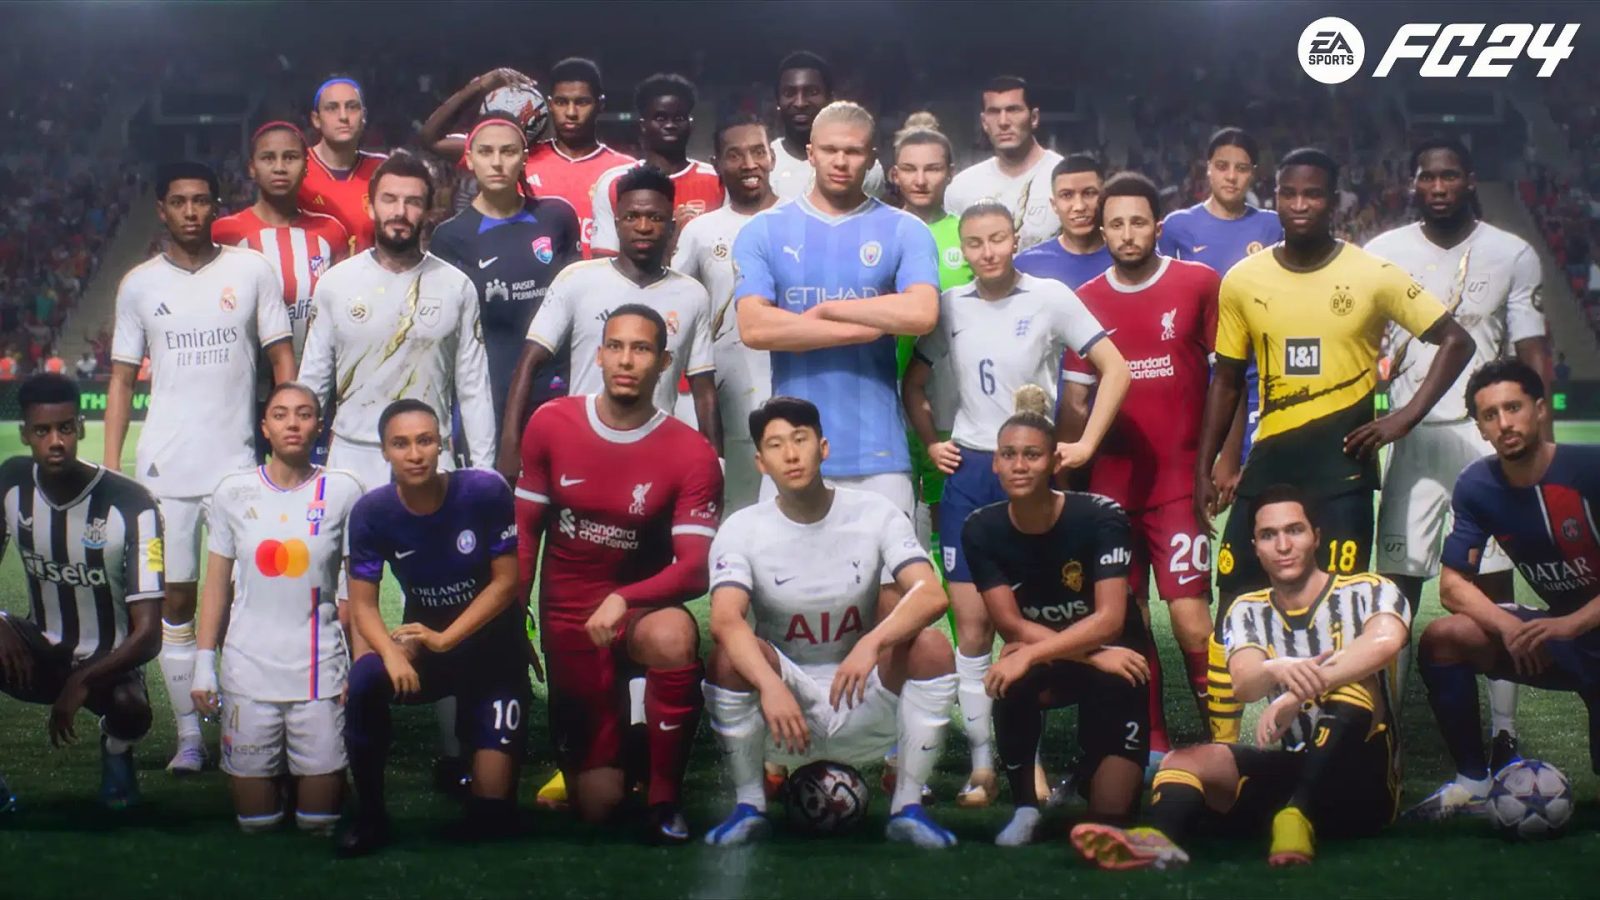 EA FC 24 - A New Era Begins in Soccer Gaming